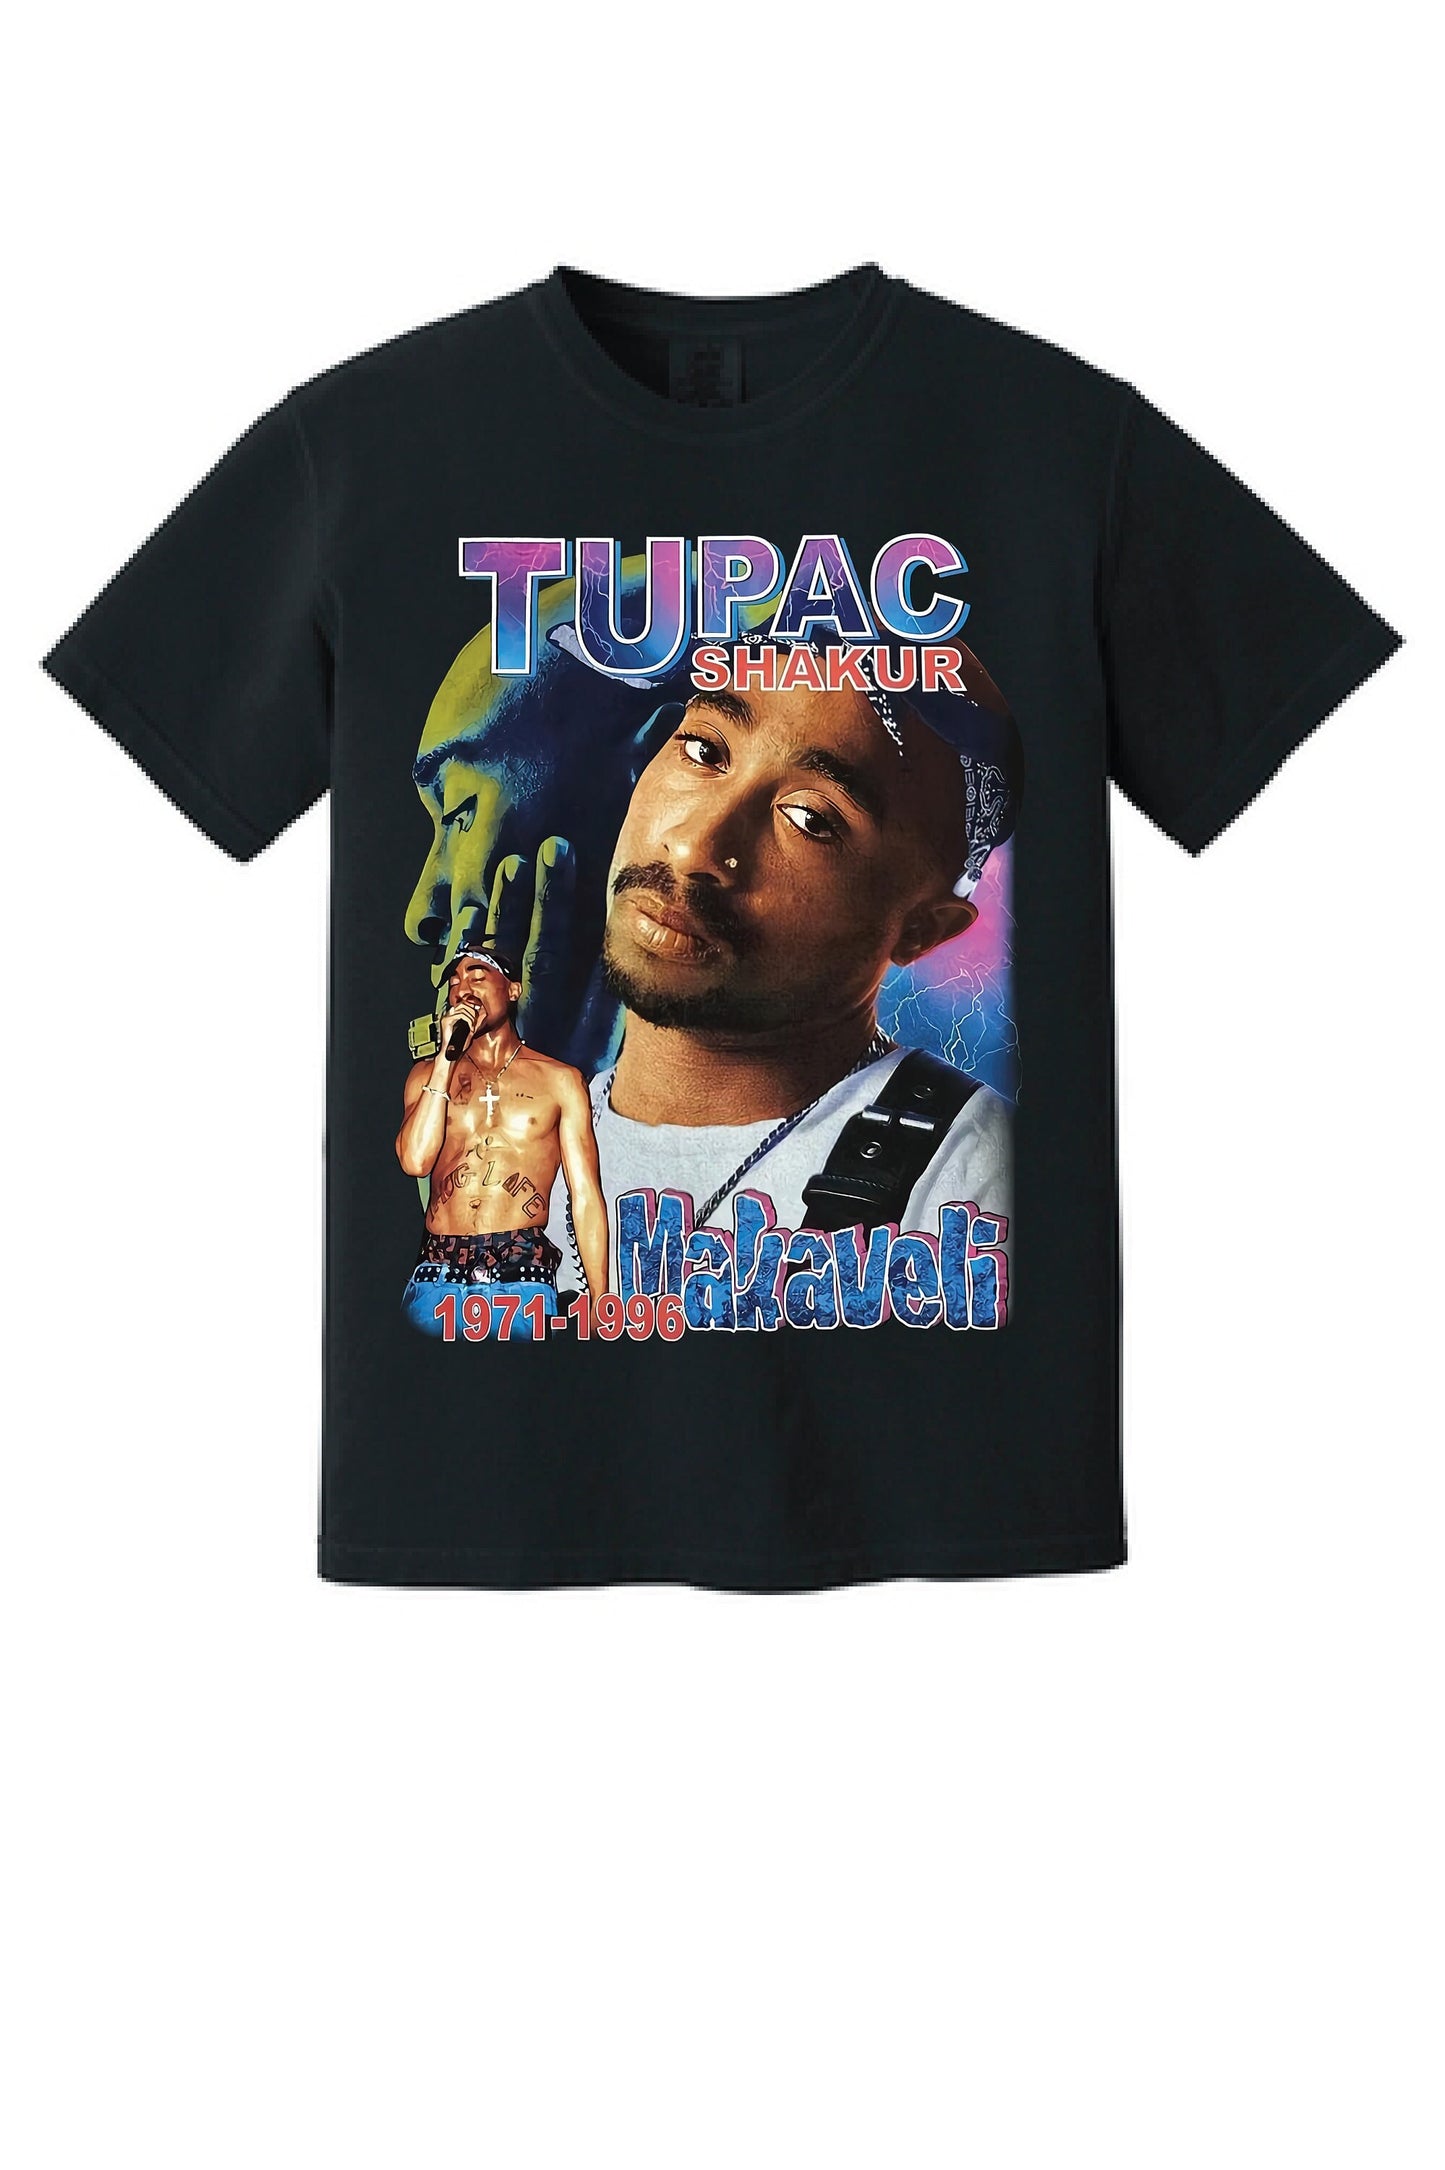 Vintage 90's Style Tupac Bootleg Tee - Retro Hip-Hop Shirt